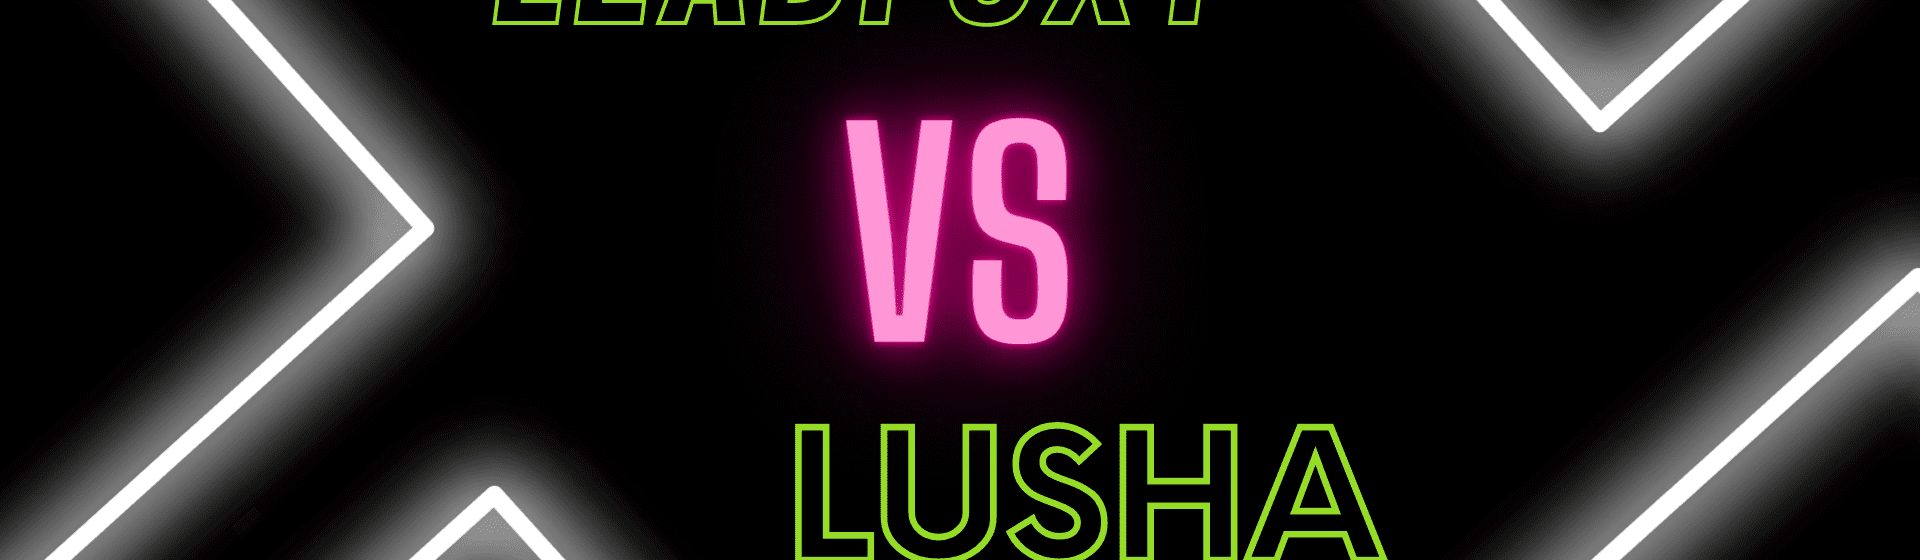 Leadfoxy vs. Lusha: Which Lead Generation Software Reigns Supreme